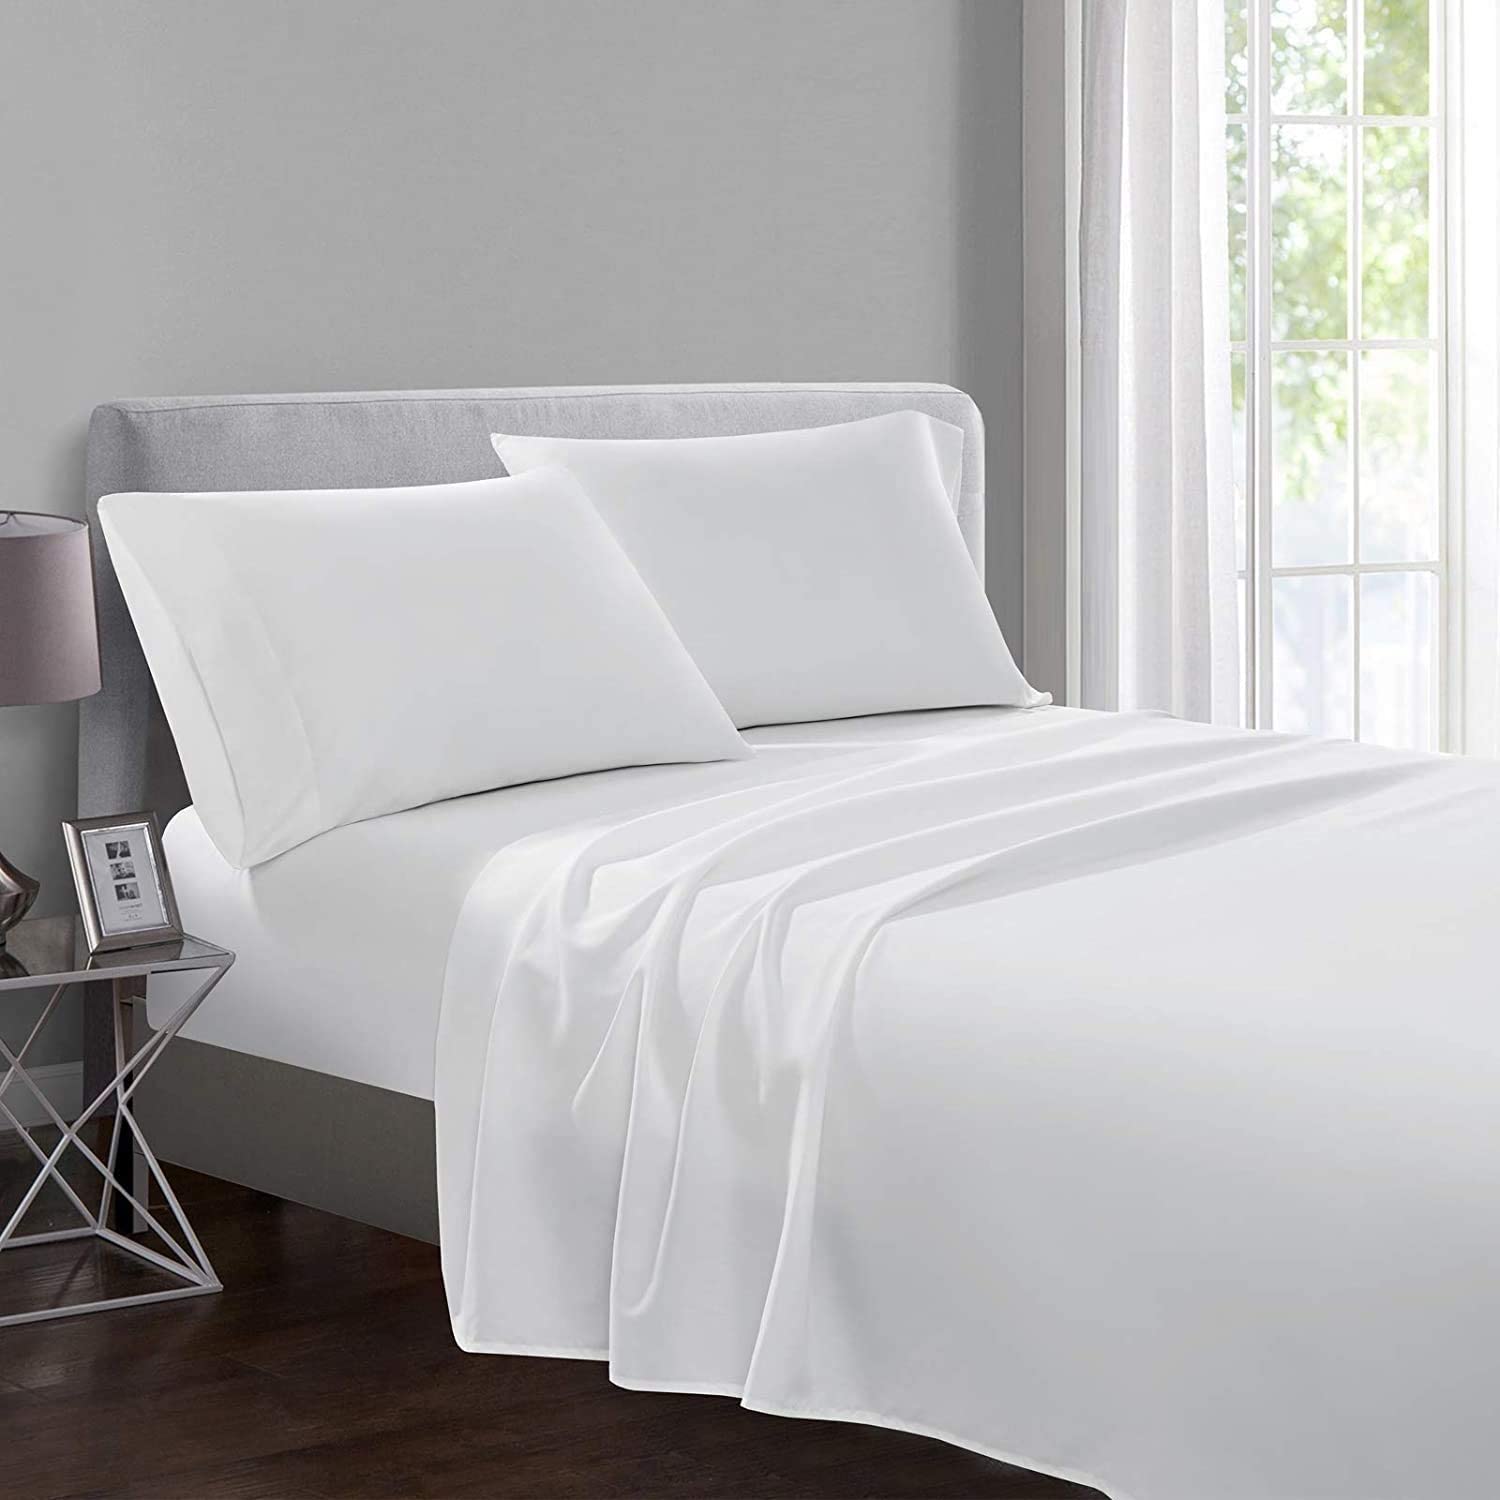 bed linen sheet sets